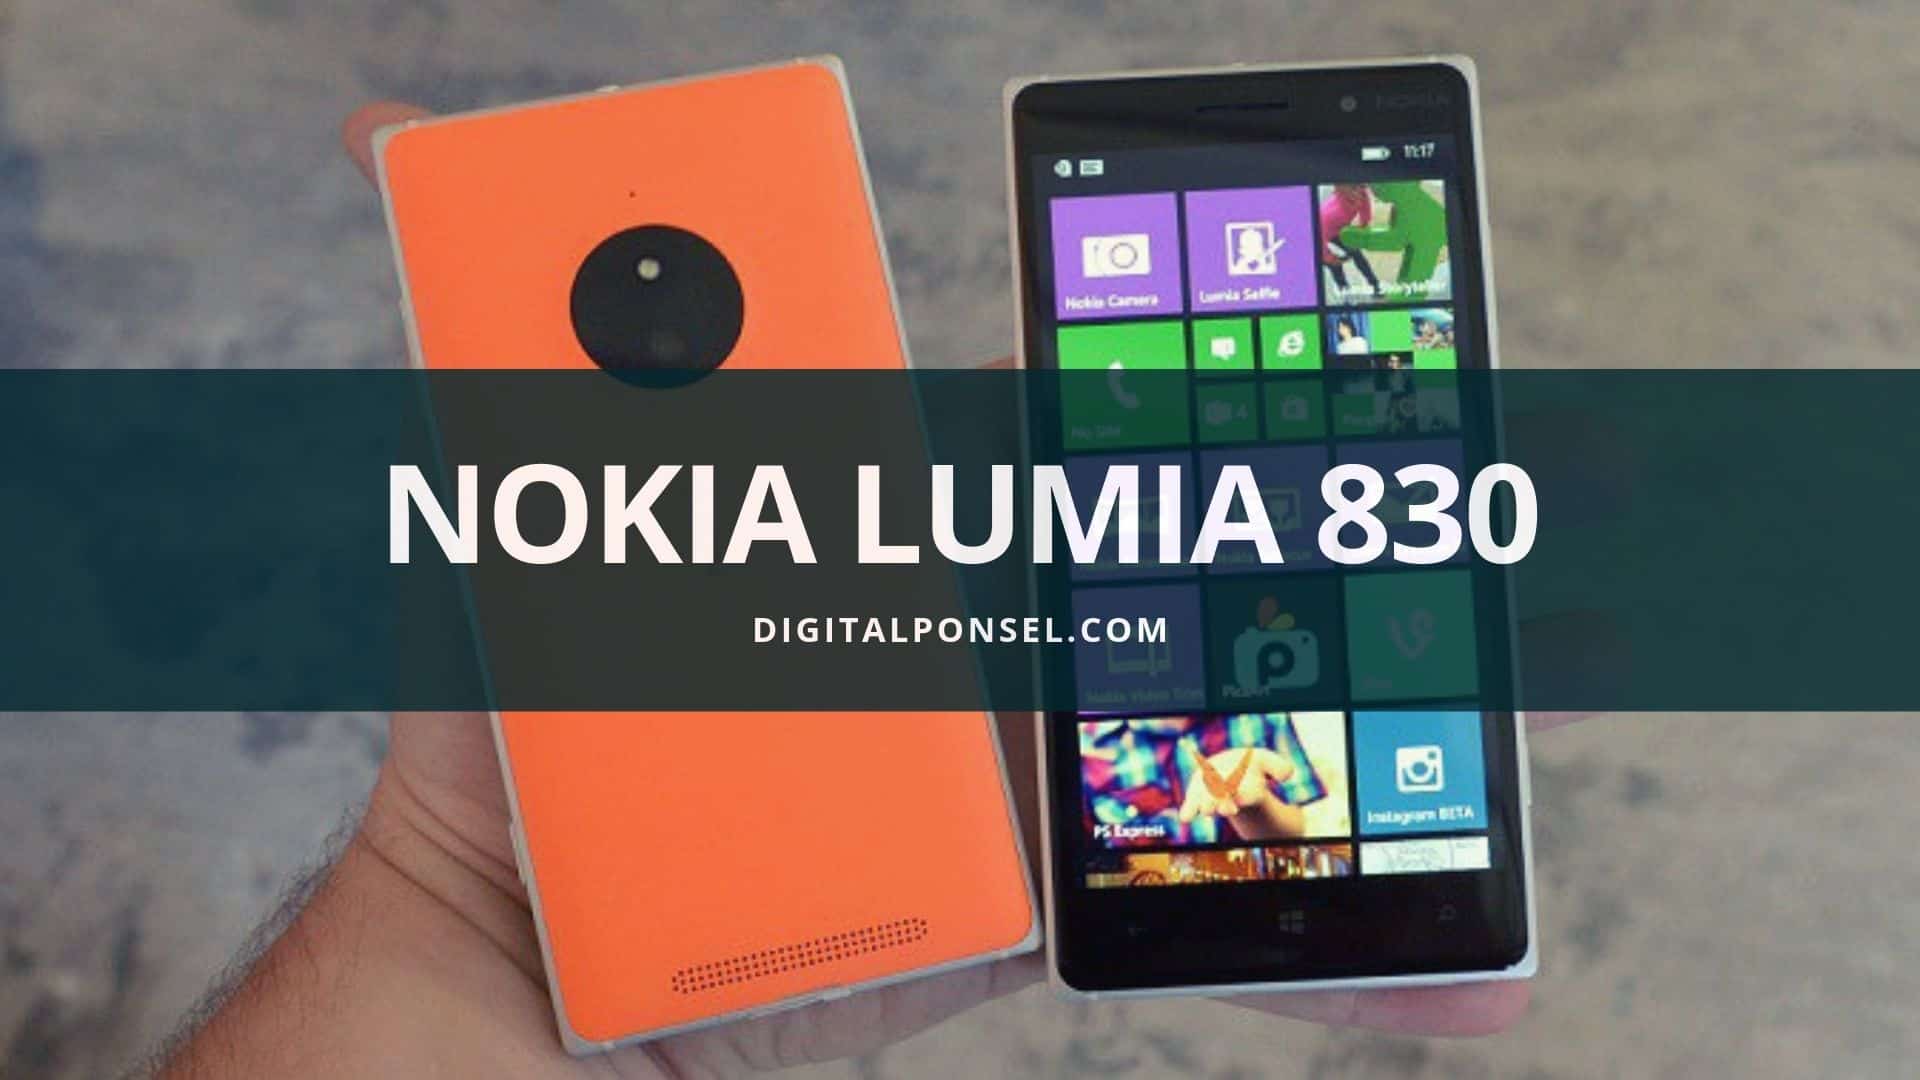 Harga Nokia Lumia 830 Terbaru dan Spesifikasi March 2020